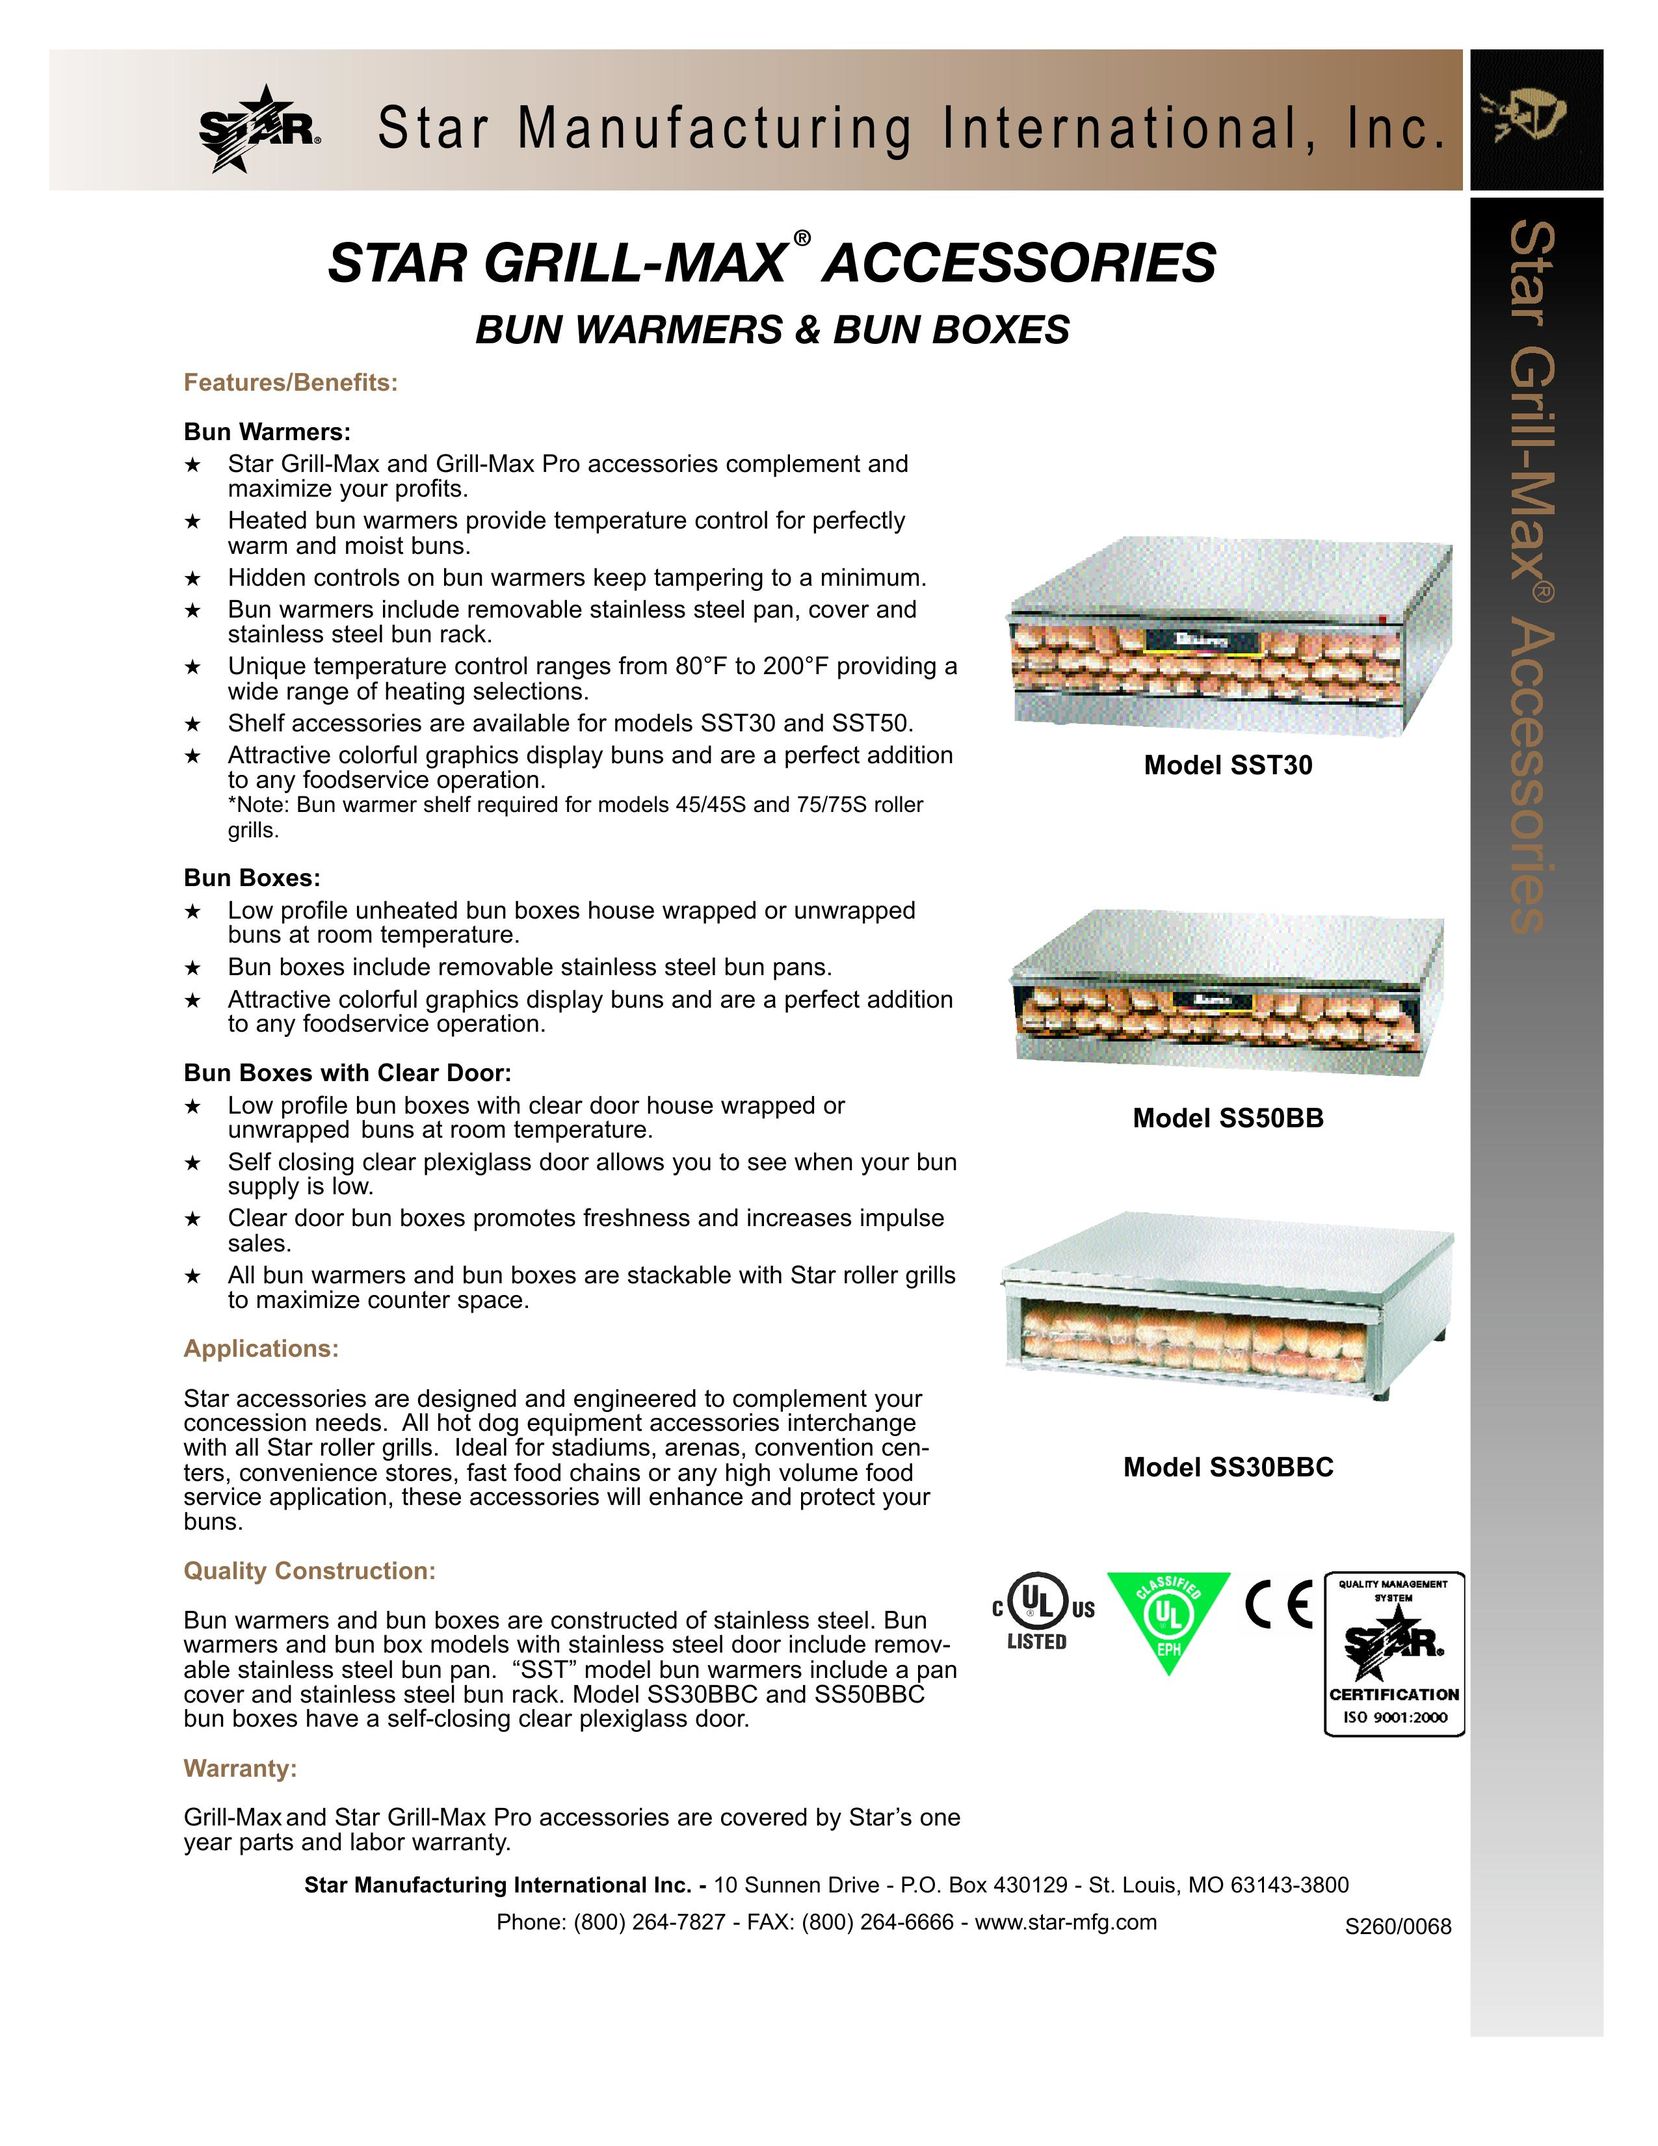 Star Manufacturing SS50BB Food Warmer User Manual